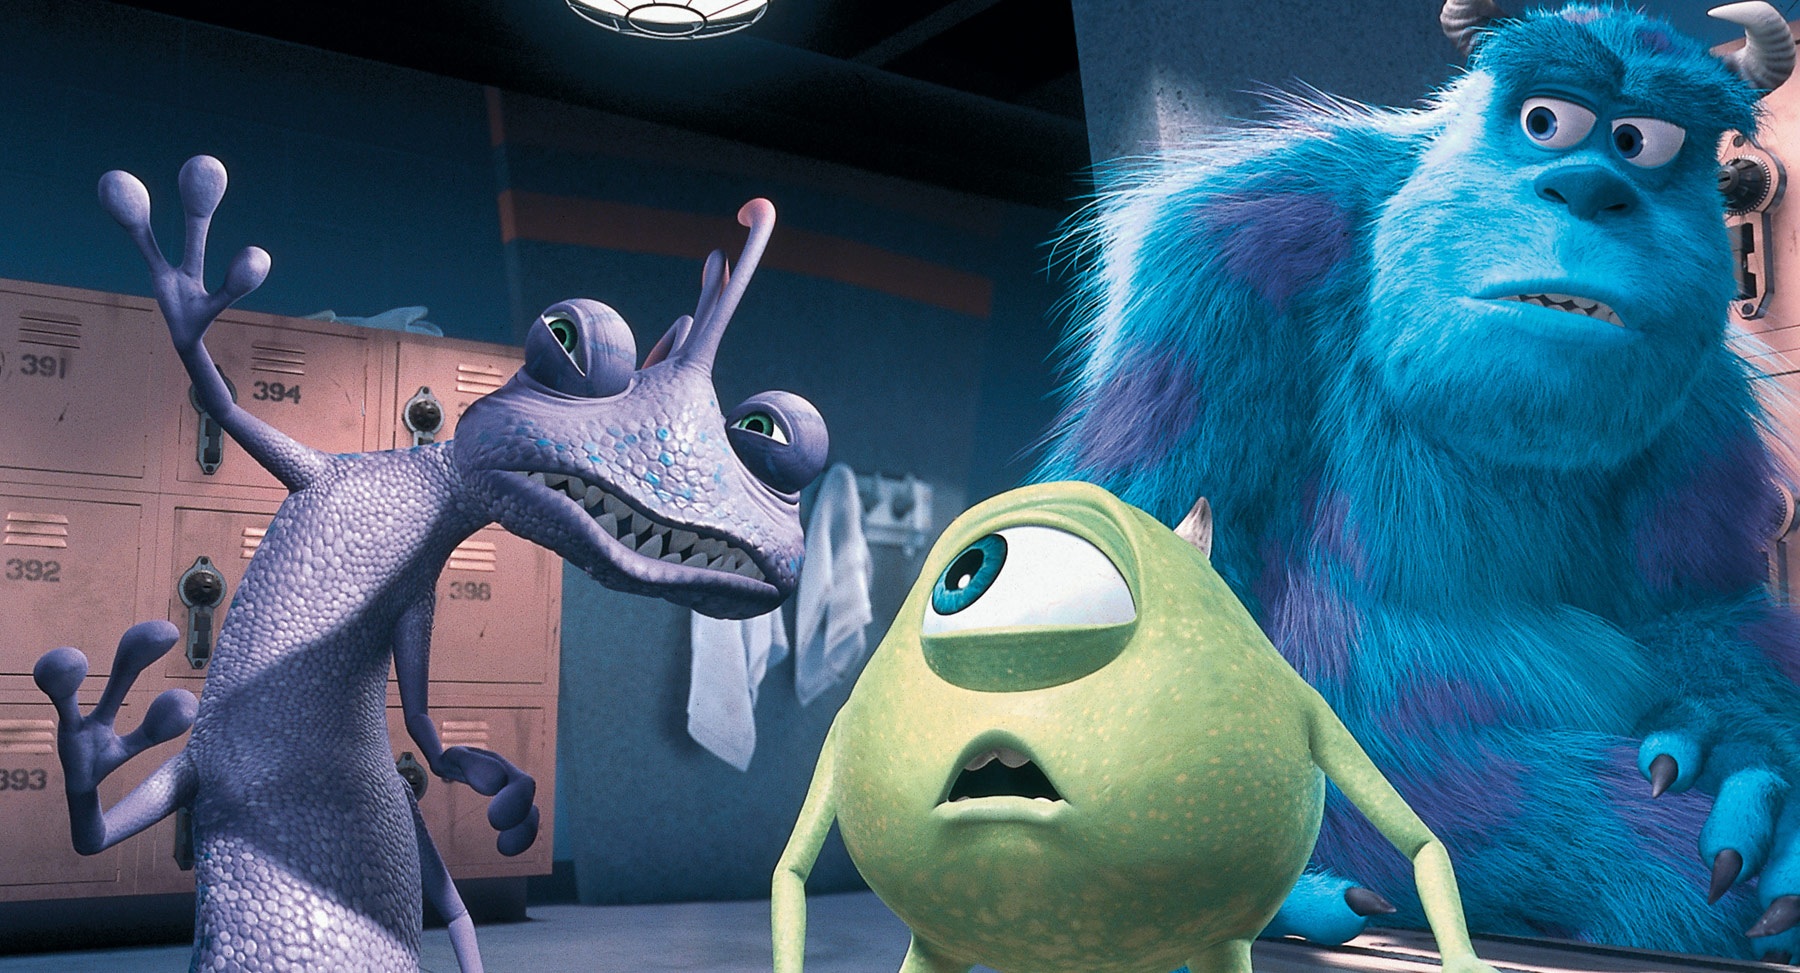 Image - Mike, Sulley, and Randall.jpg - Pixar Wiki - Disney Pixar ...